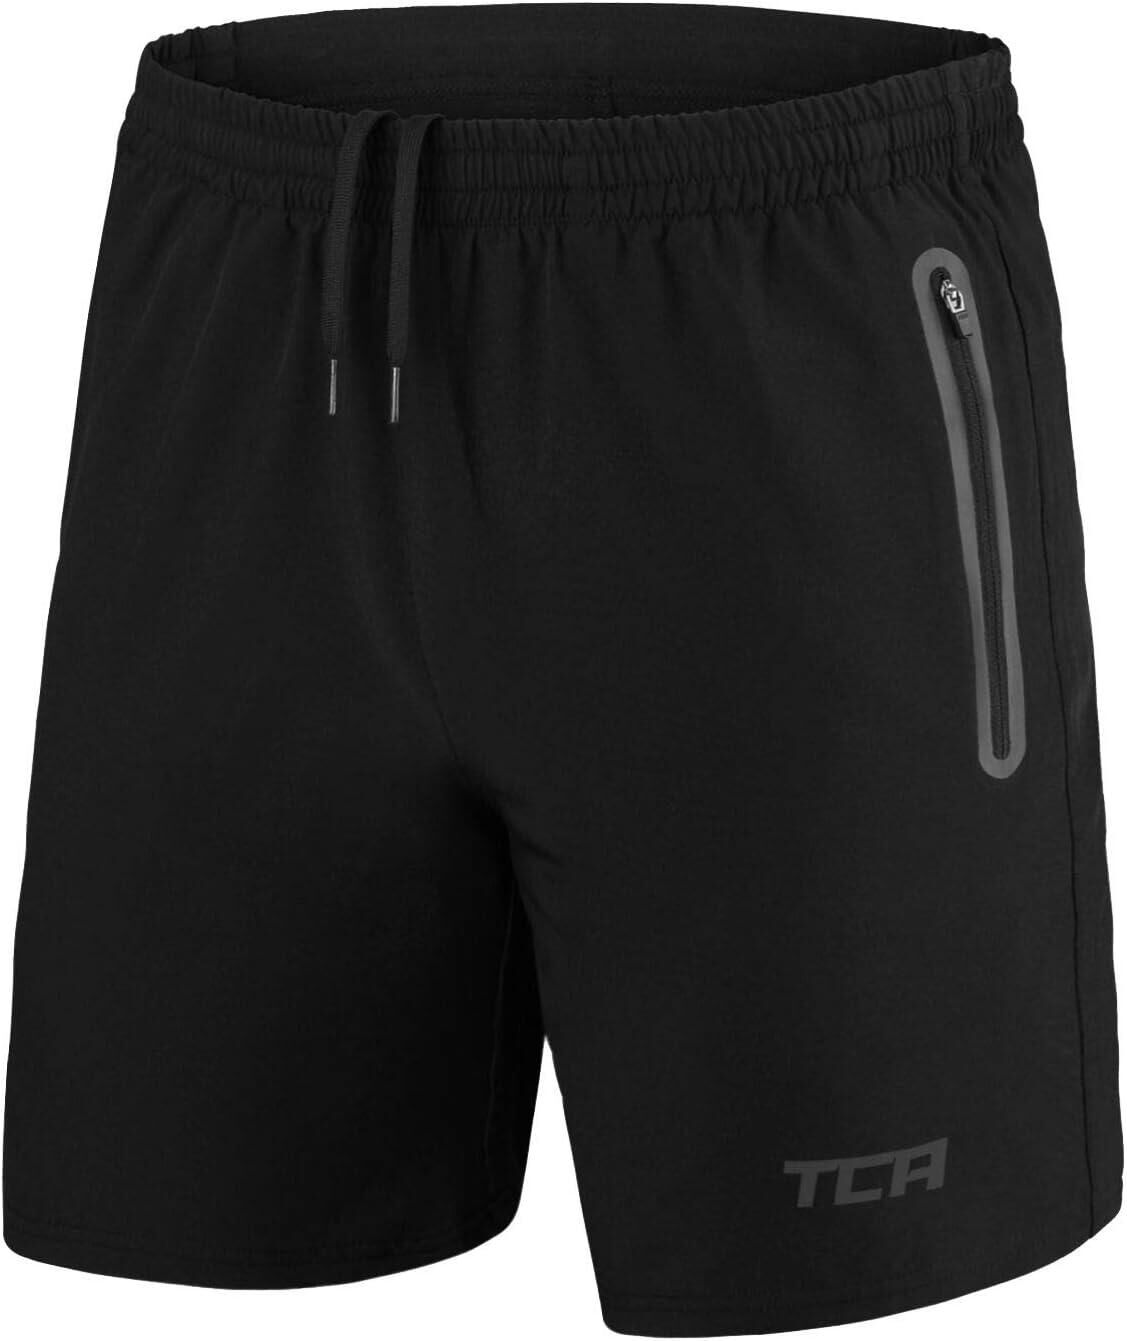 TCA Men's Elite Tech Lightweight Running Shorts with Zip Pockets - Black/Black